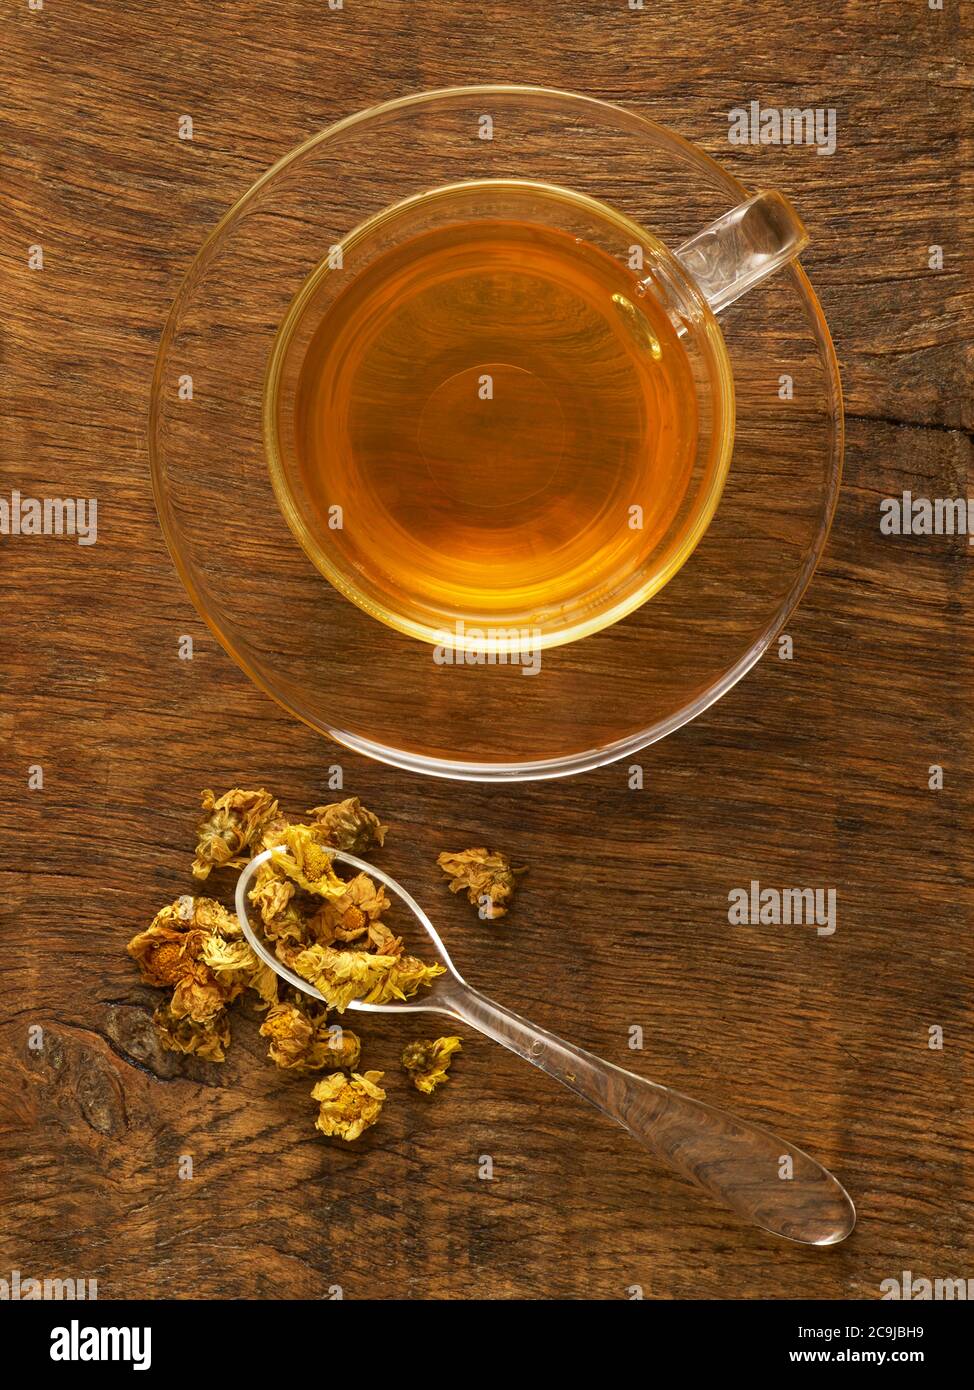 Herbs used to make herbal tea. Stock Photo